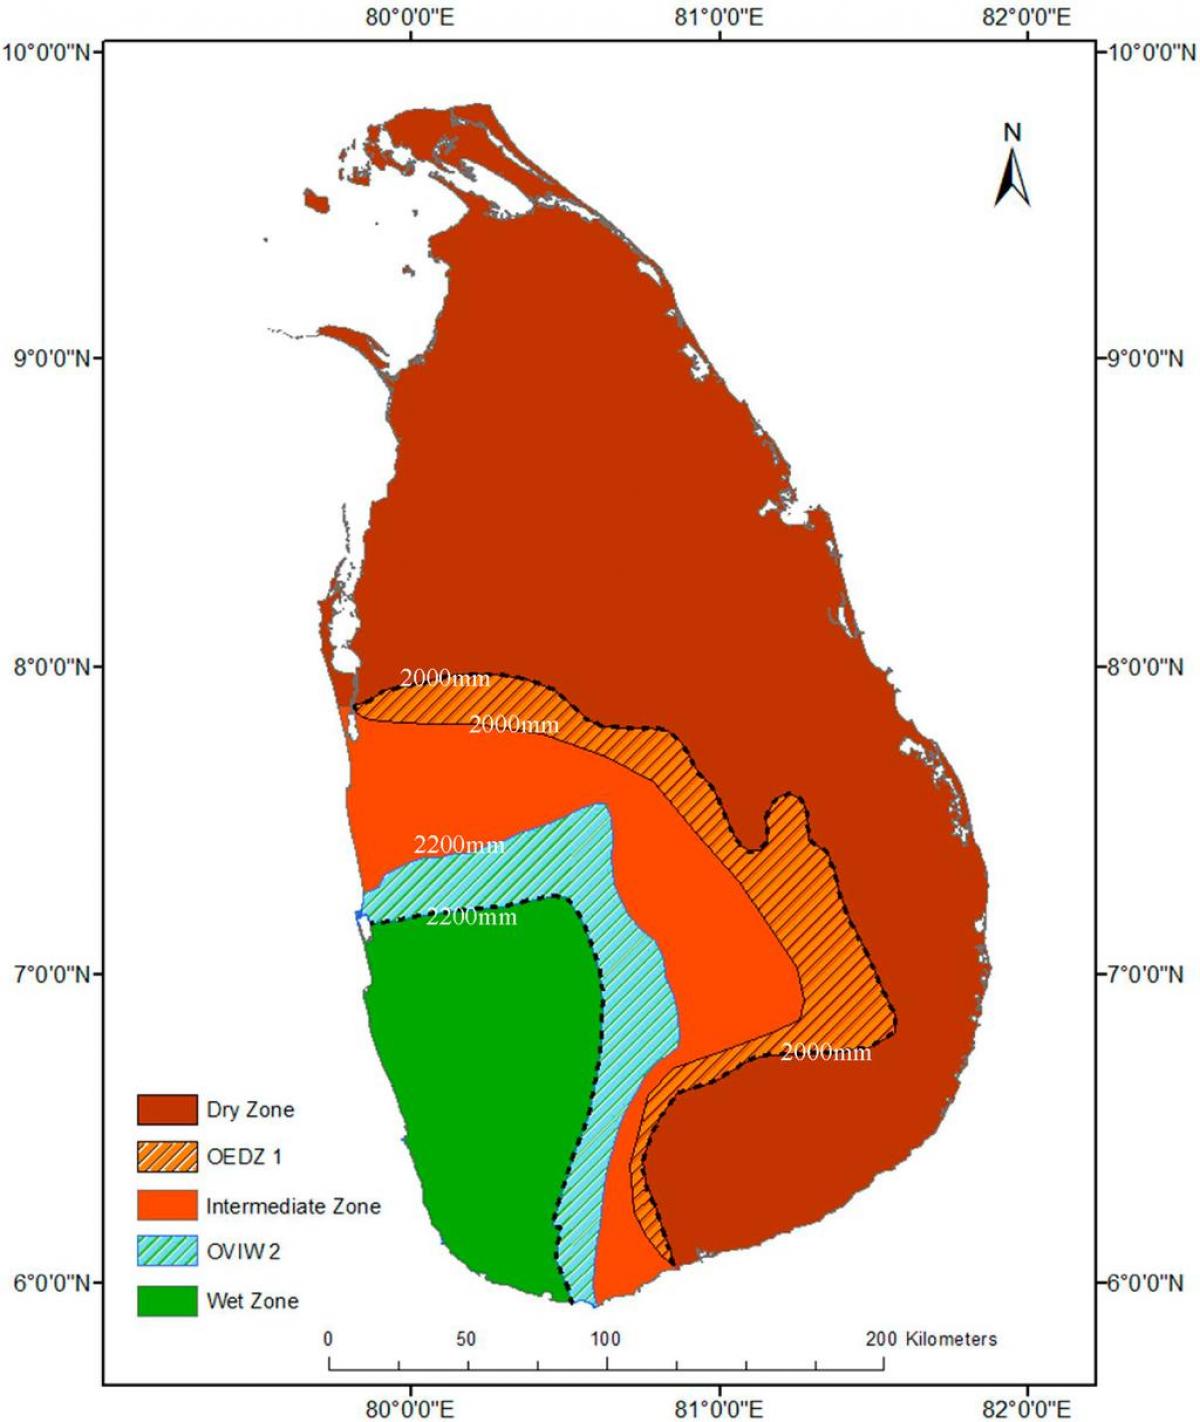 Sri Lanka climate zone map